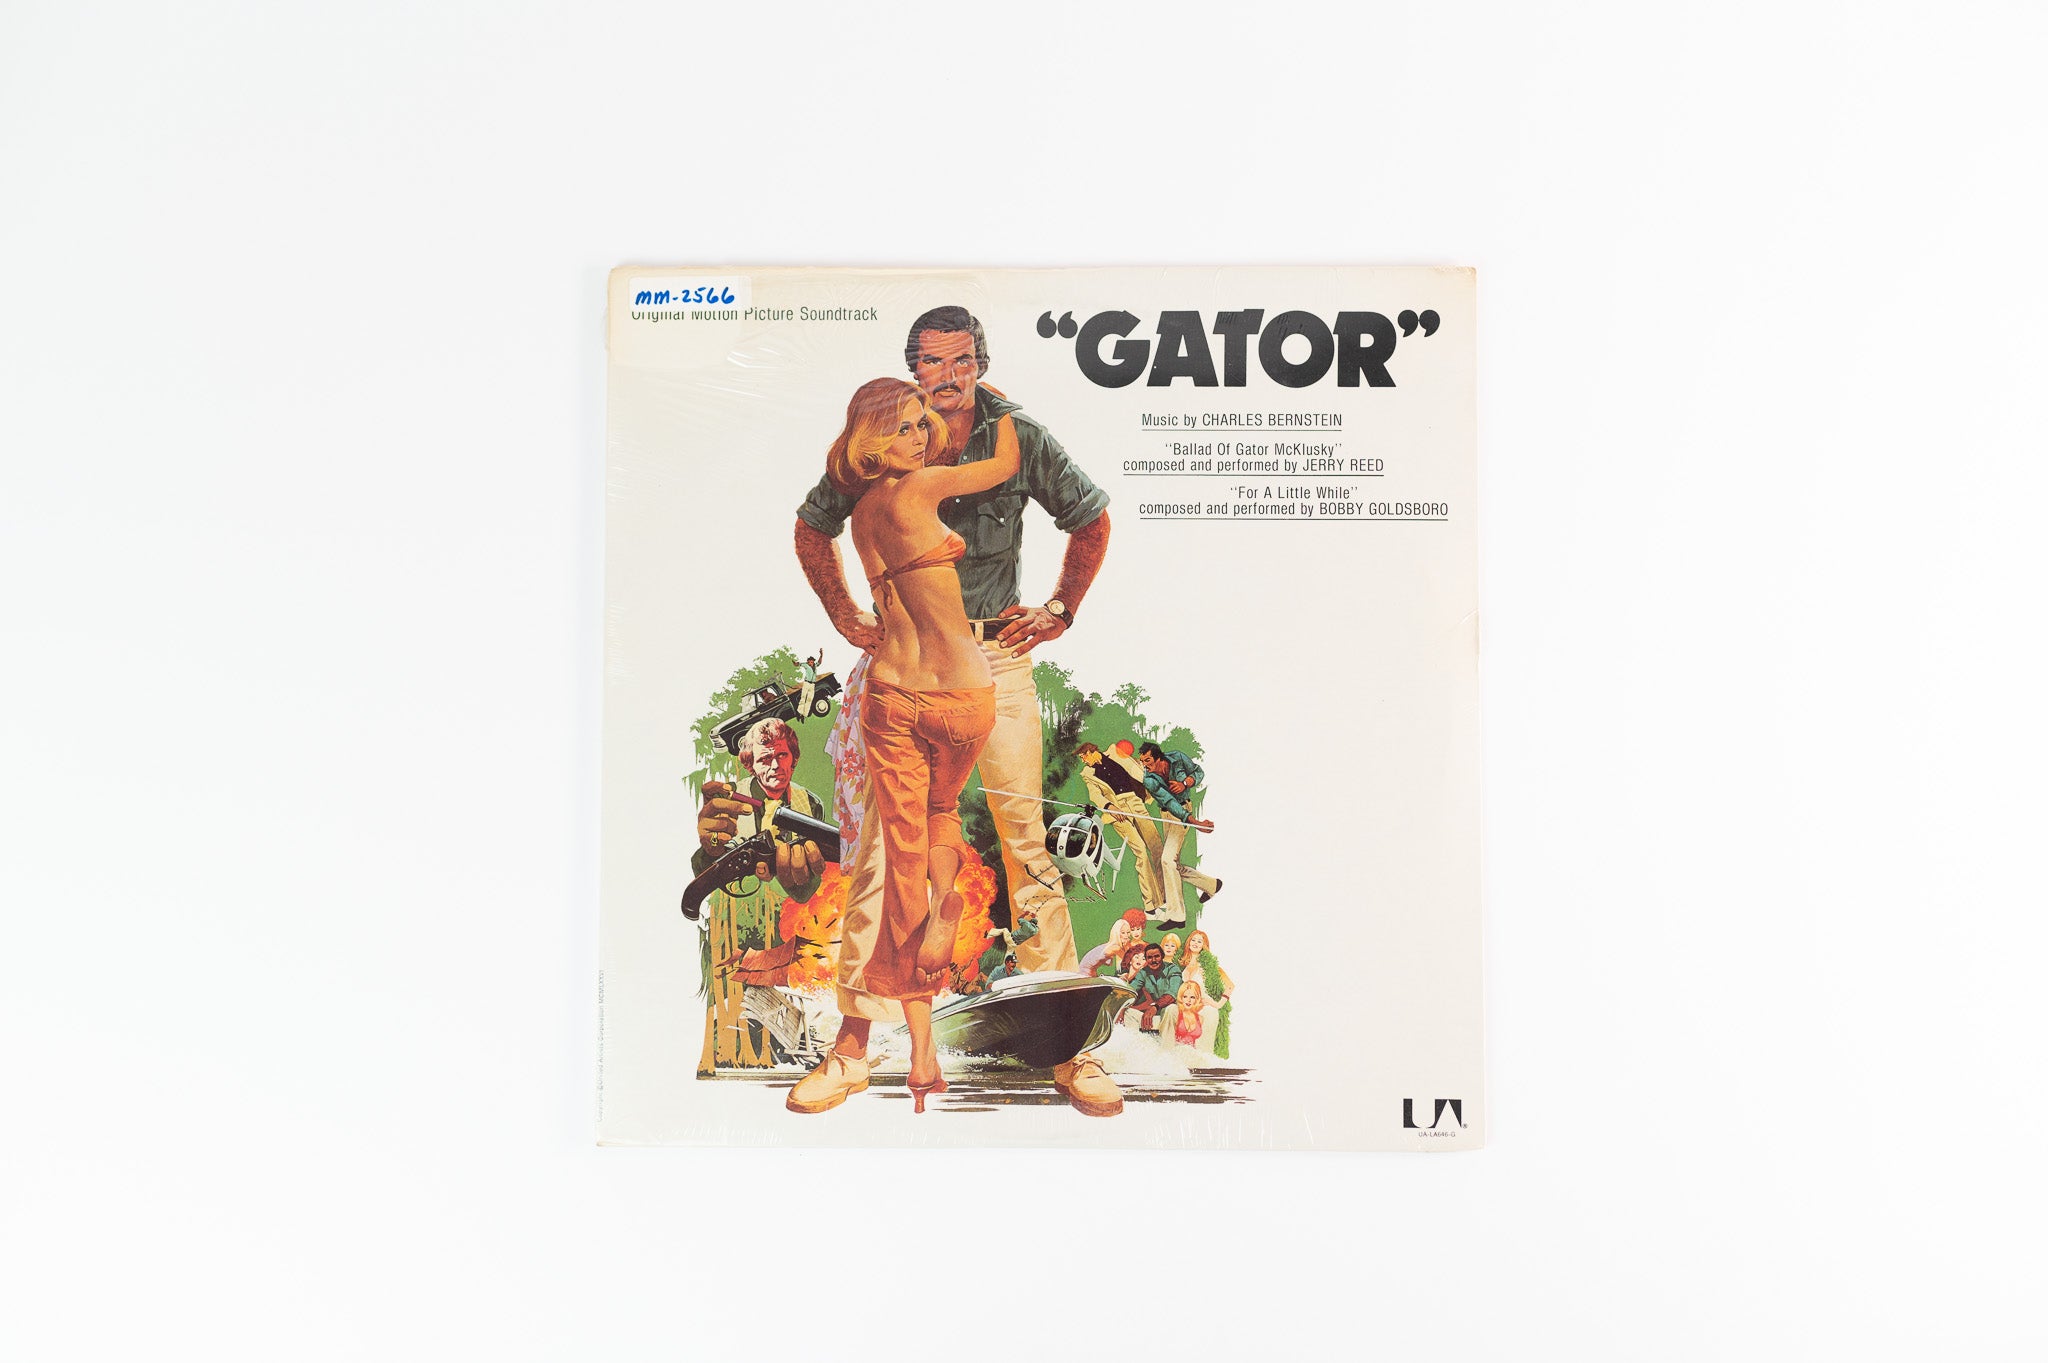 Charles Bernstein - Gator (Original Motion Picture Soundtrack) on UA Sealed